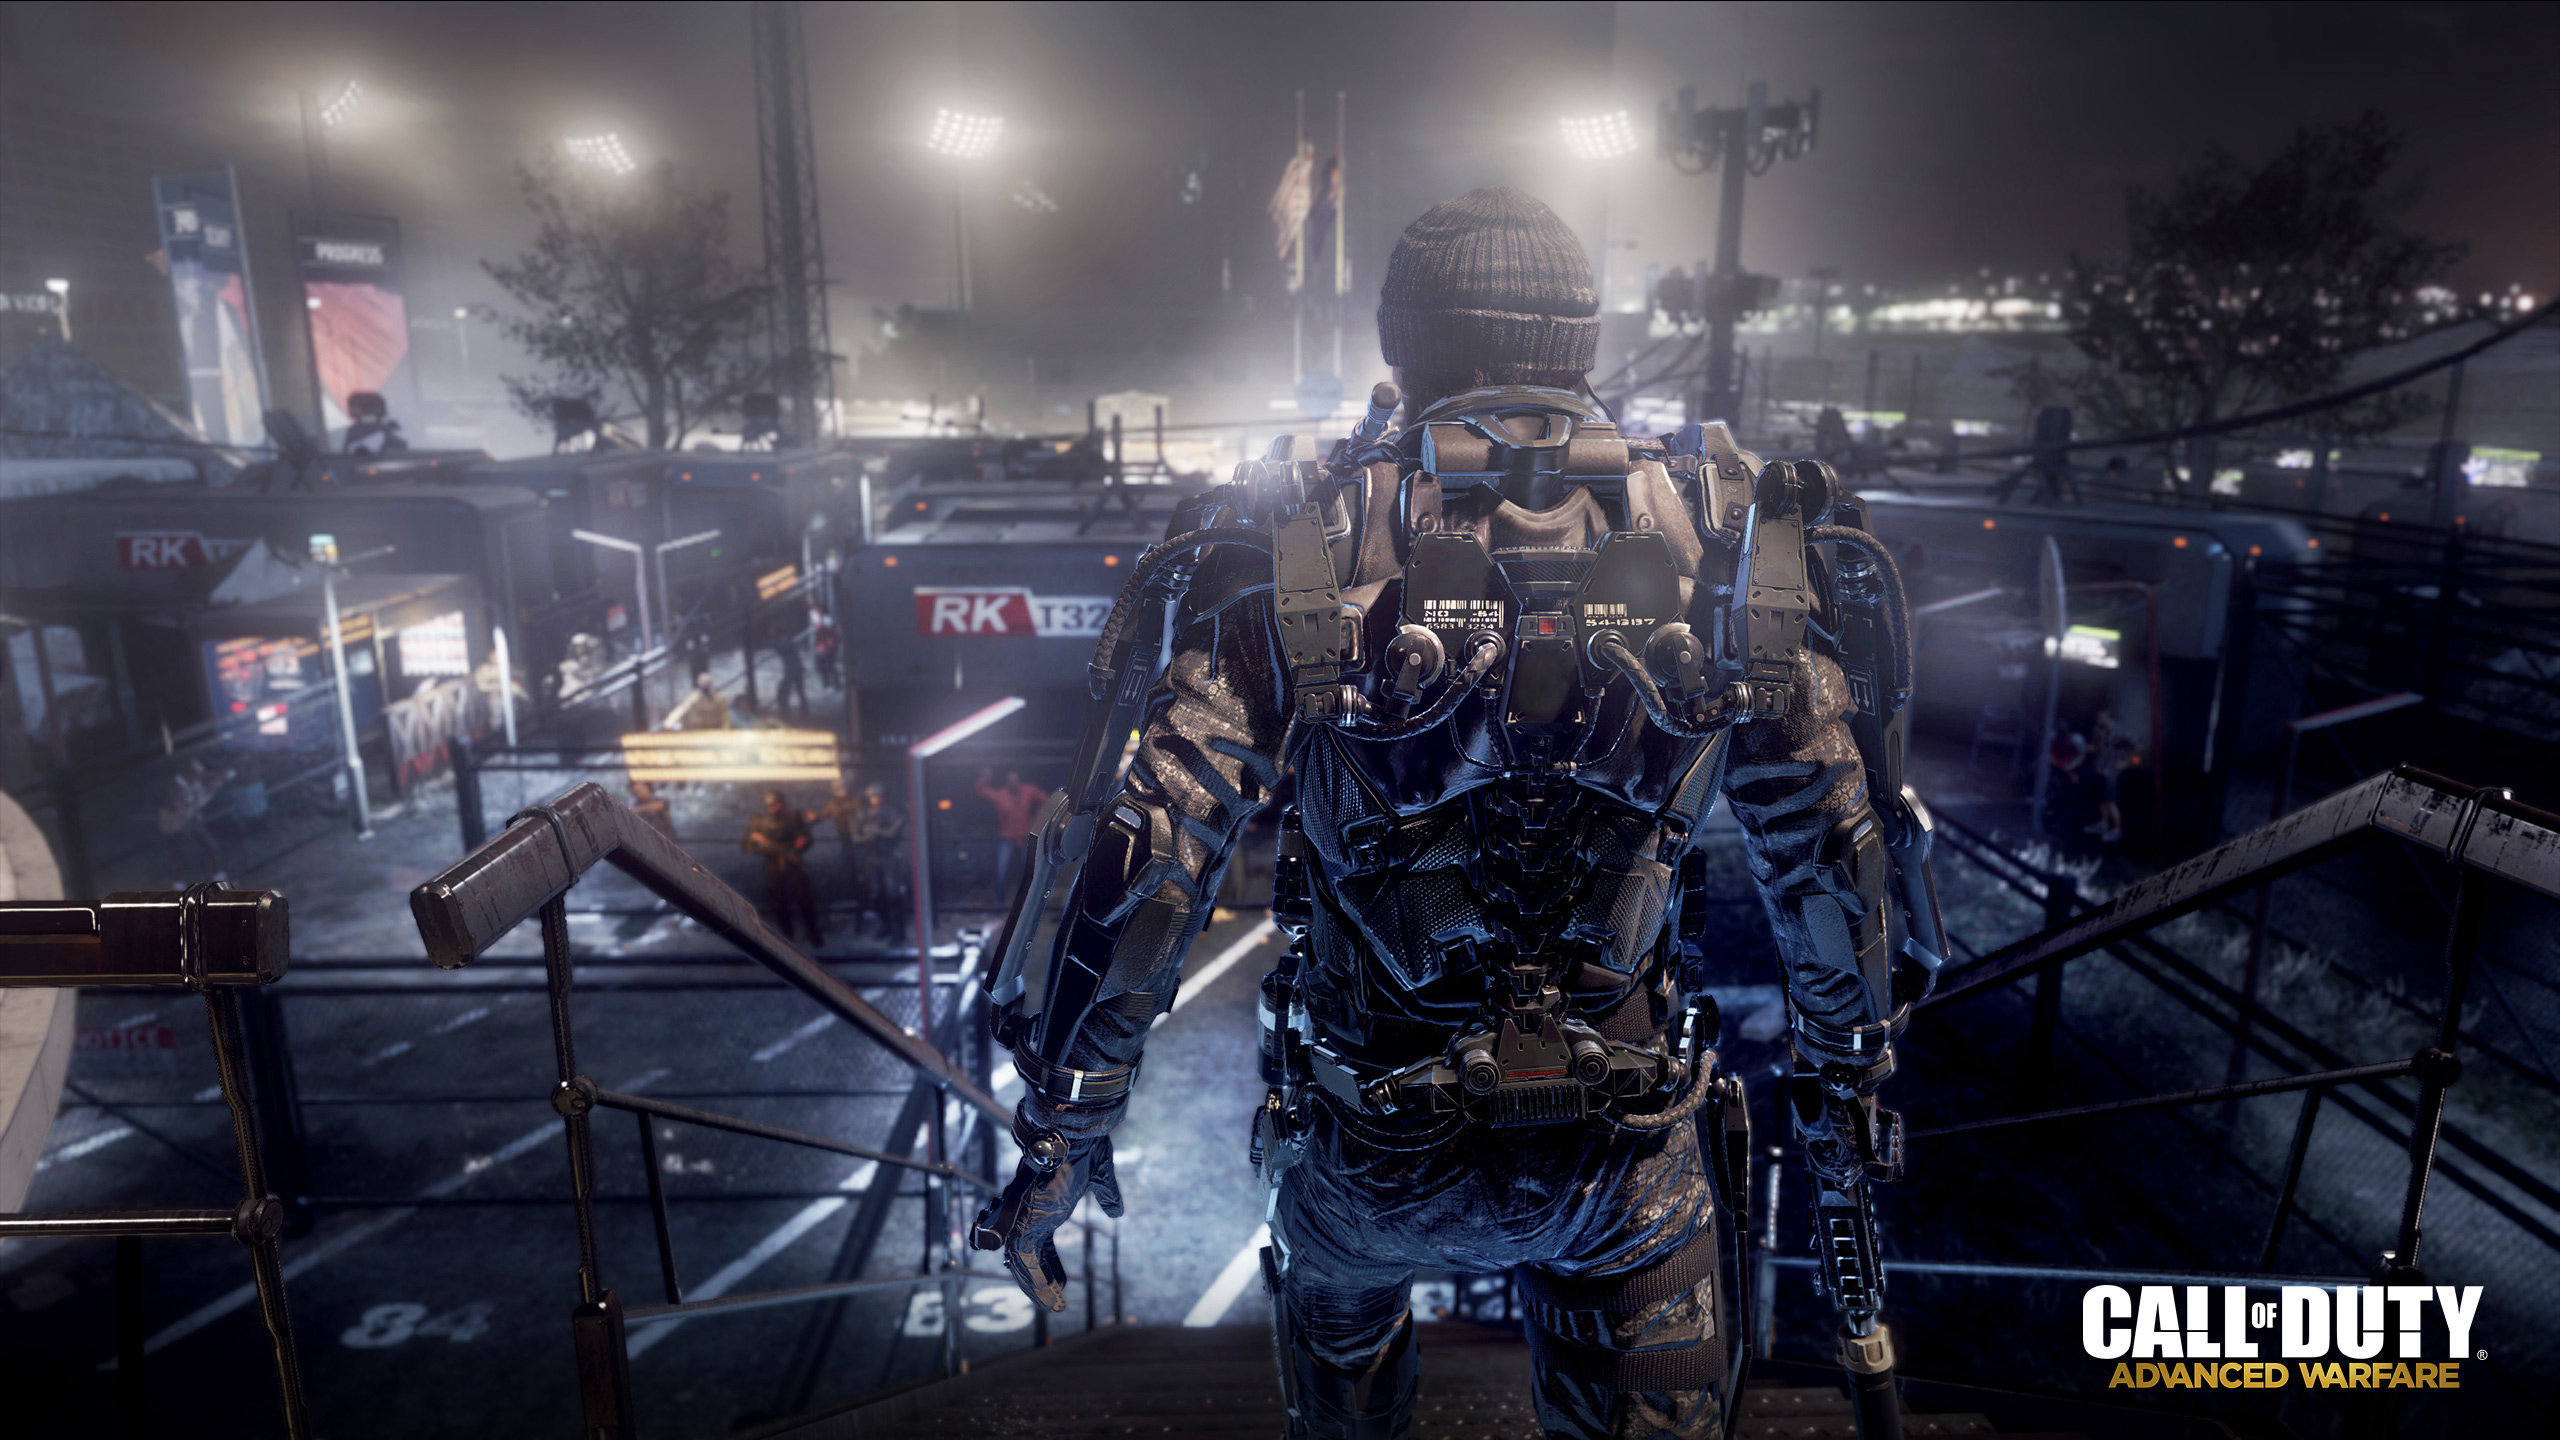 Call Of Duty Advanced Warfare Wallpapers 2560x1440 Desktop Backgrounds